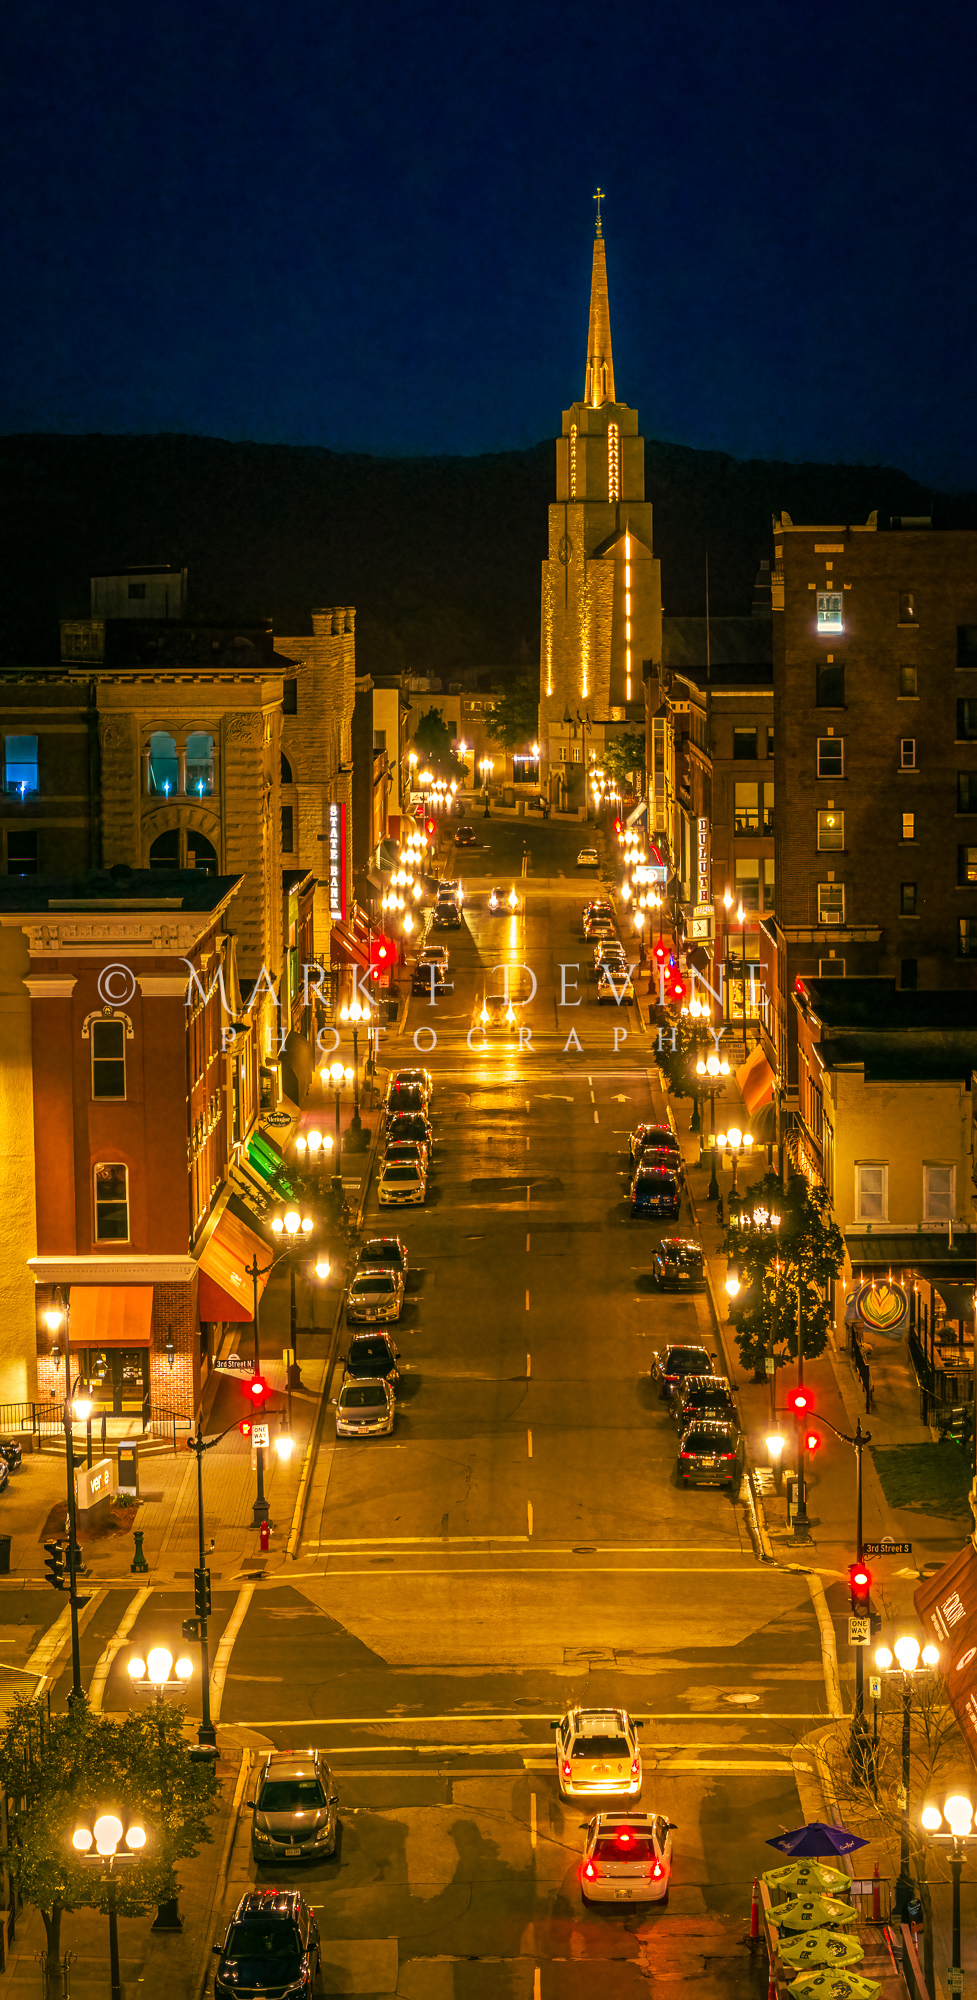 Nighttime panoramic aerial image of the merchants along Main Street in La Crosse, Wisconsin.